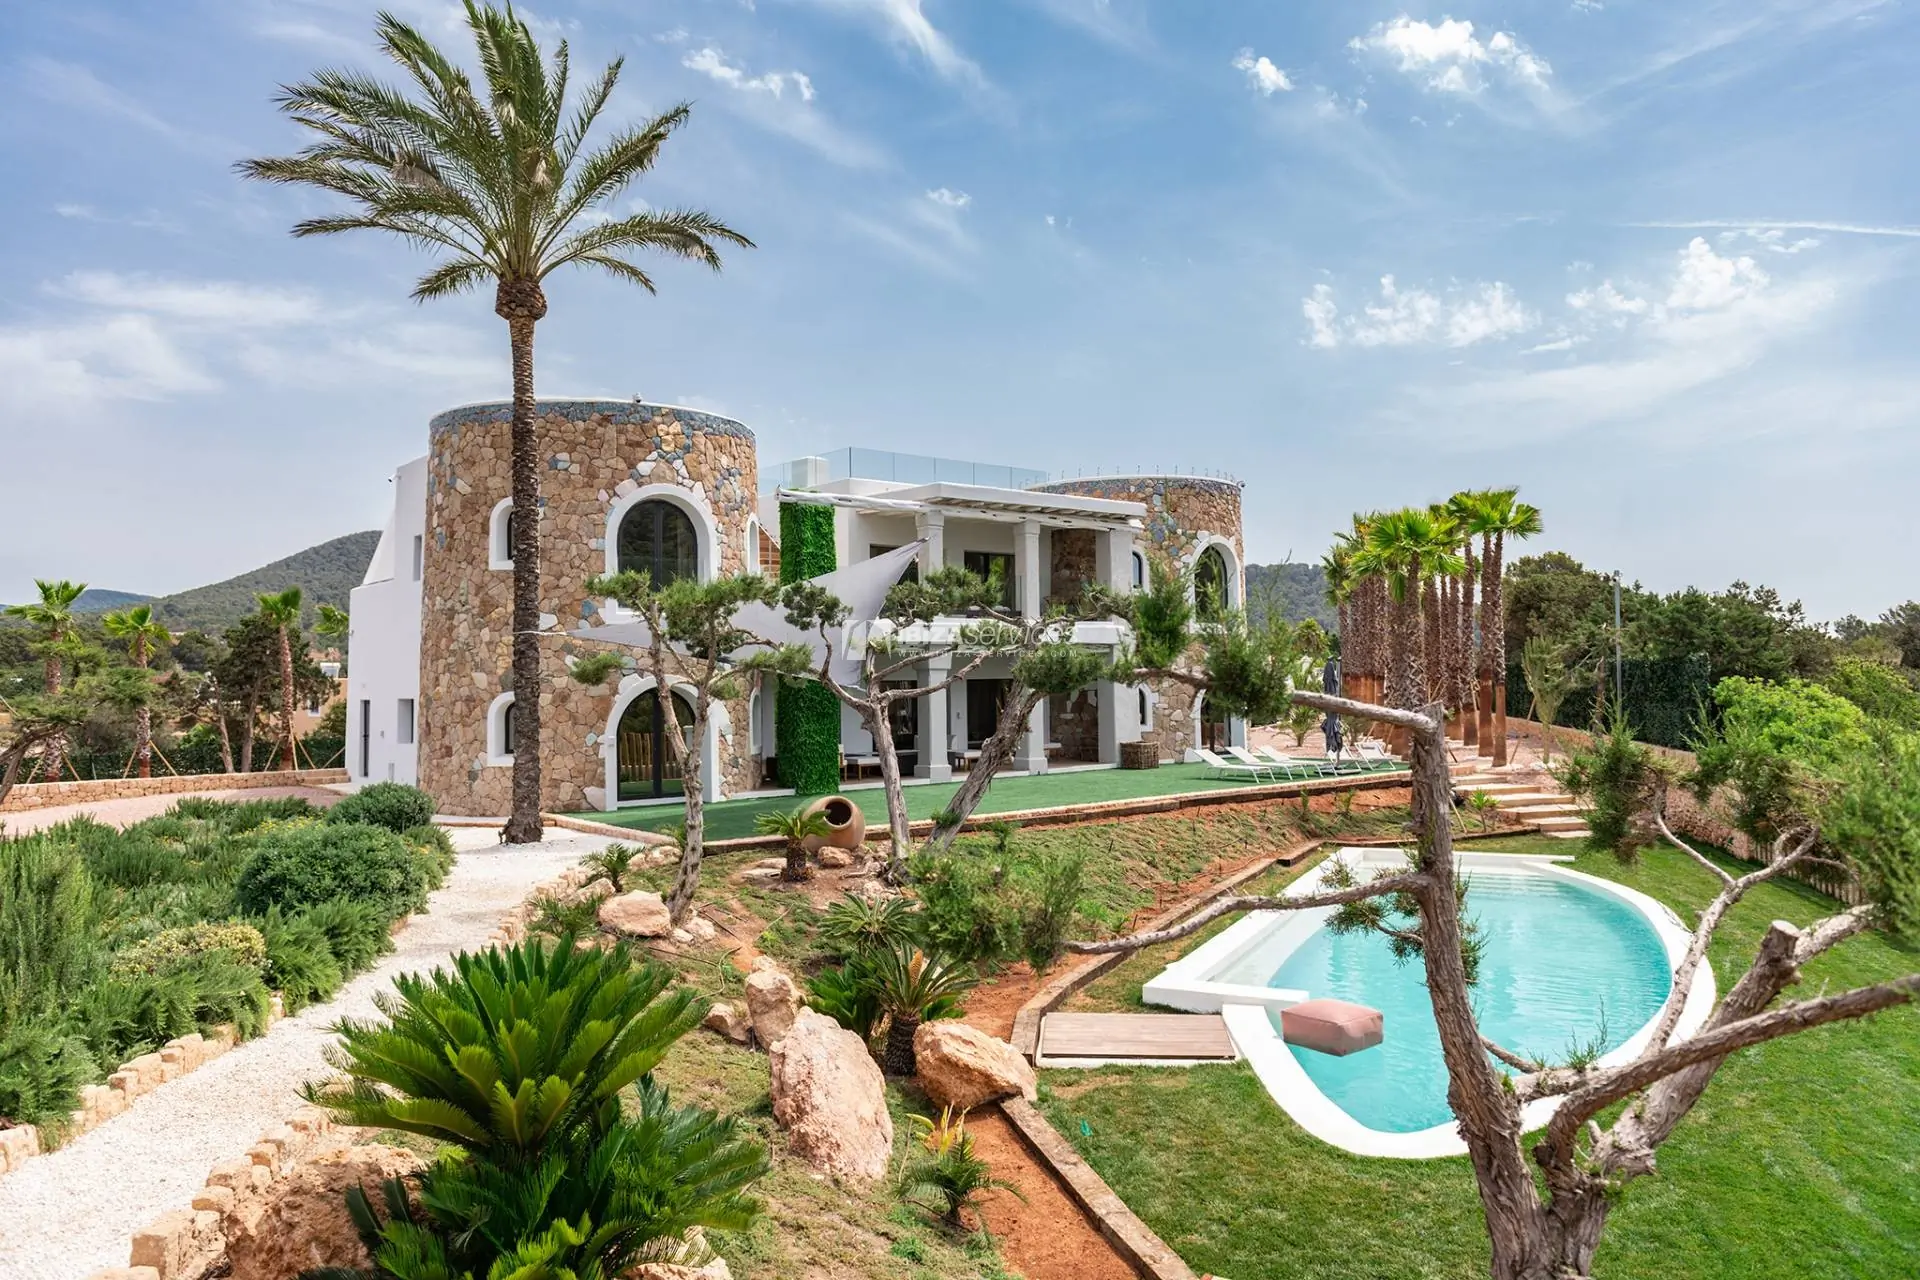 Gloednieuwe moderne villa Cala Jondal dichtbij Blue Marlin